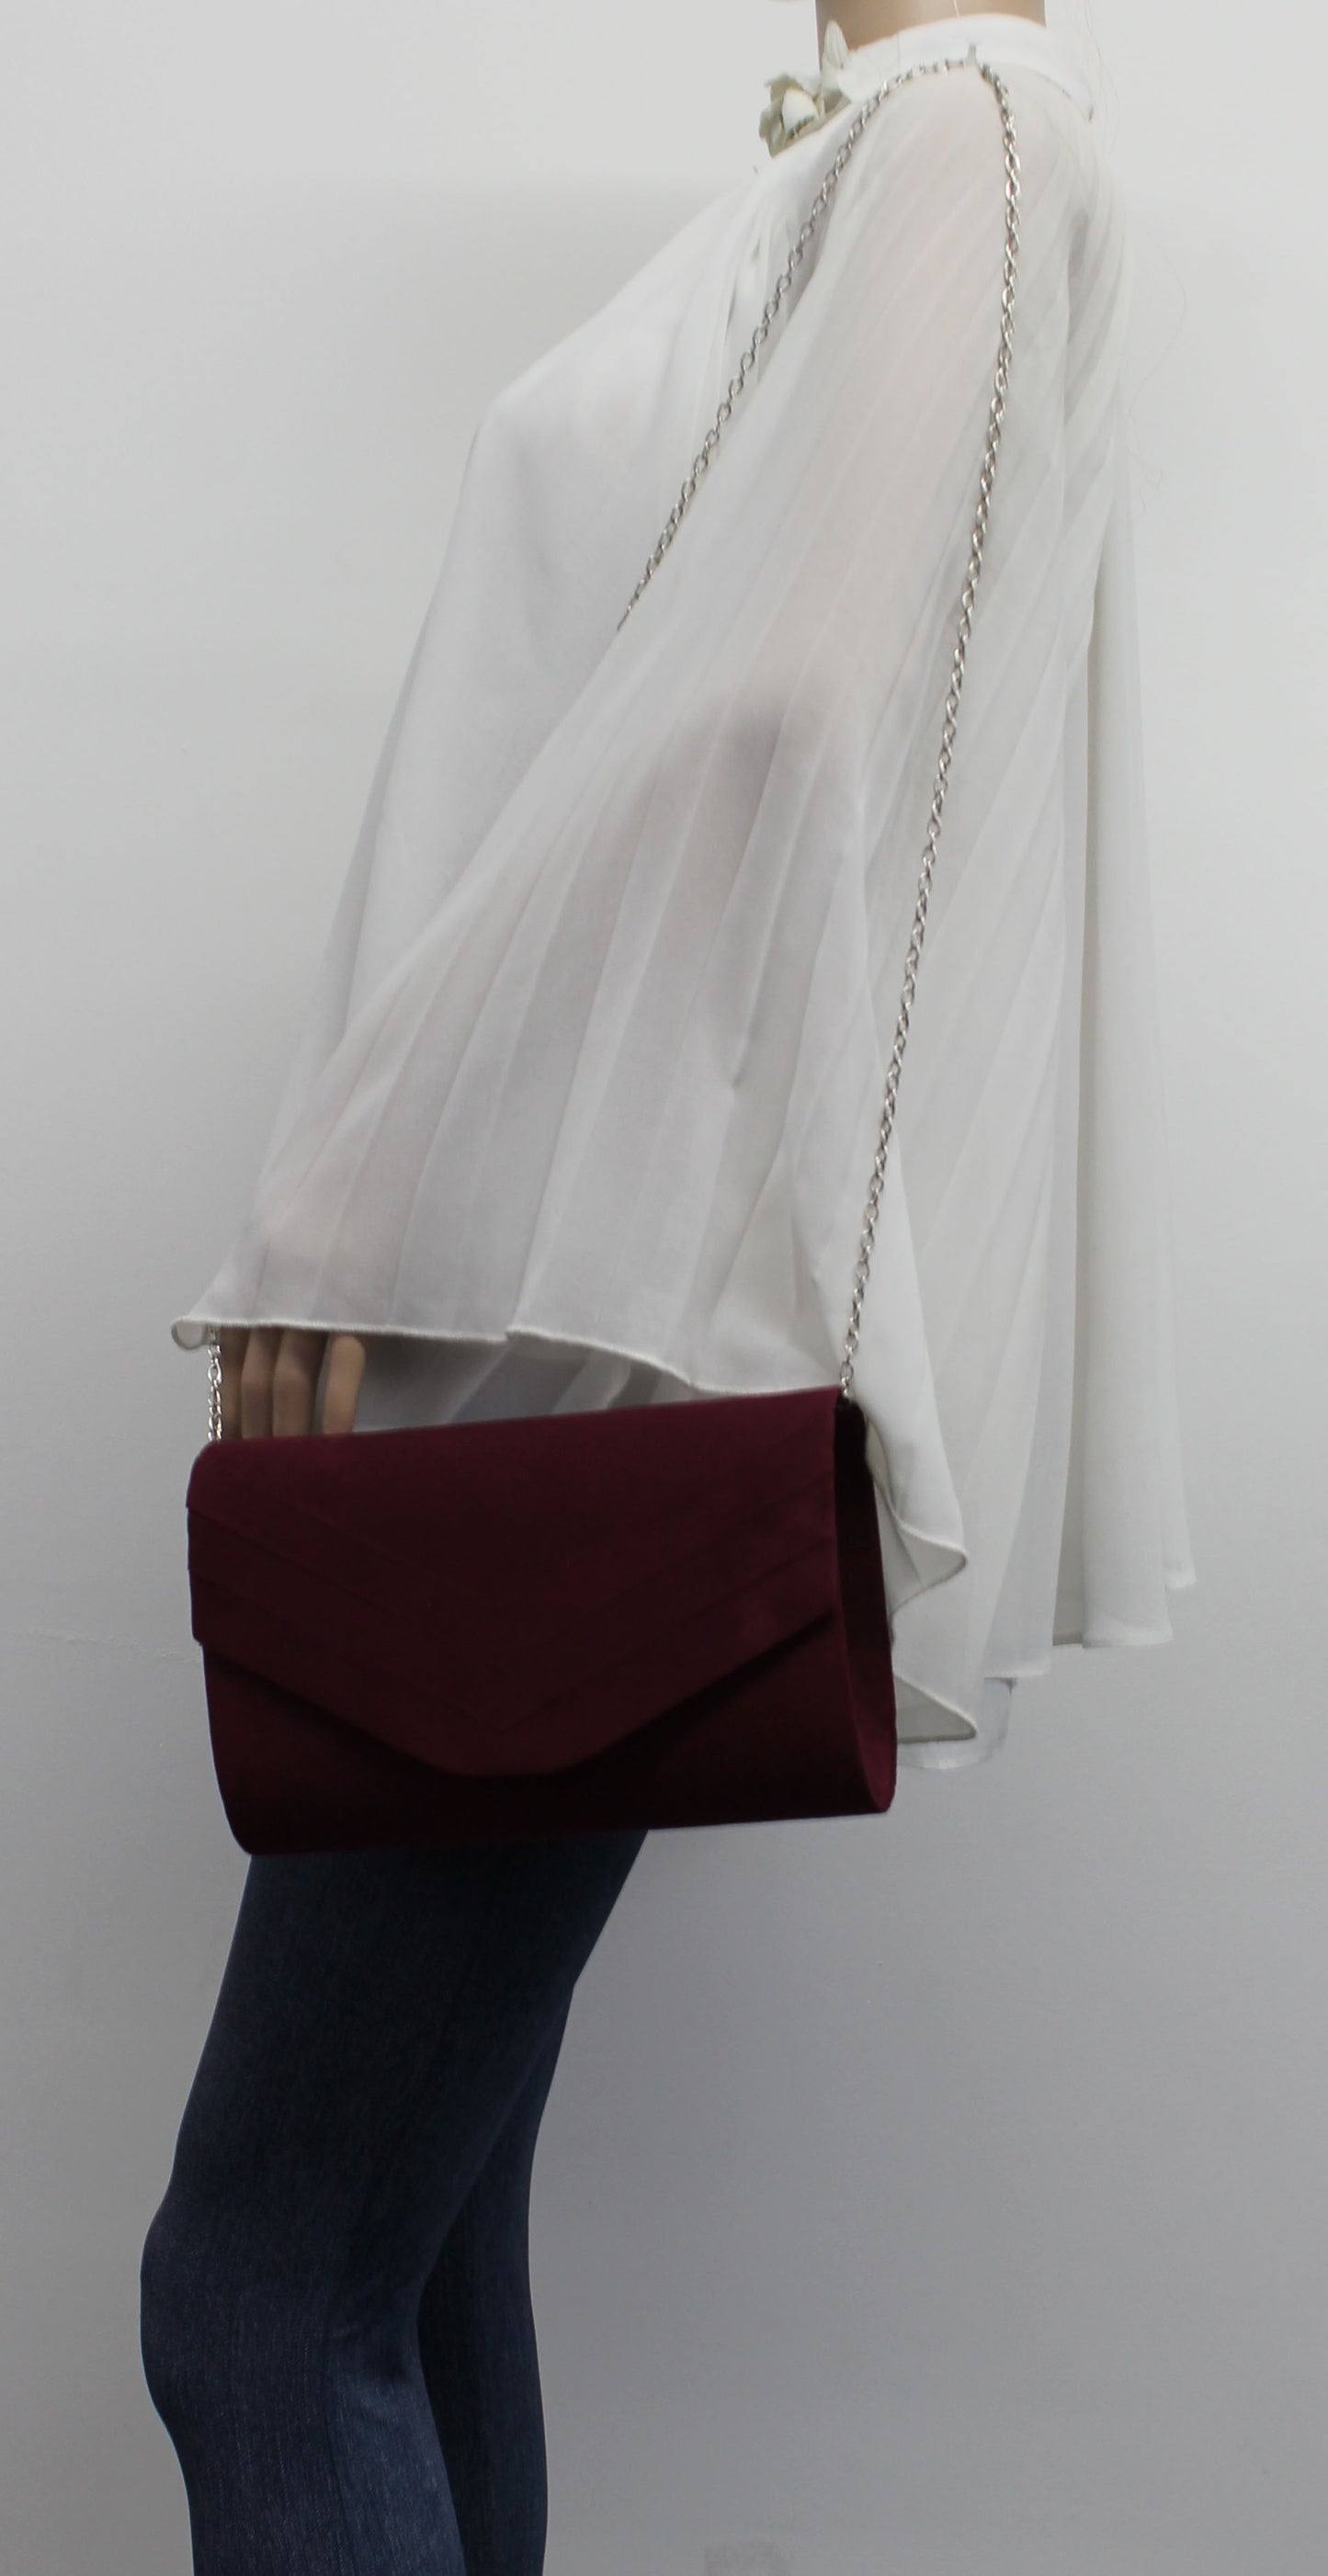 SWANKYSWANS Samantha V Detail Clutch Bag Burgundy Cute Cheap Clutch Bag For Weddings School and Work